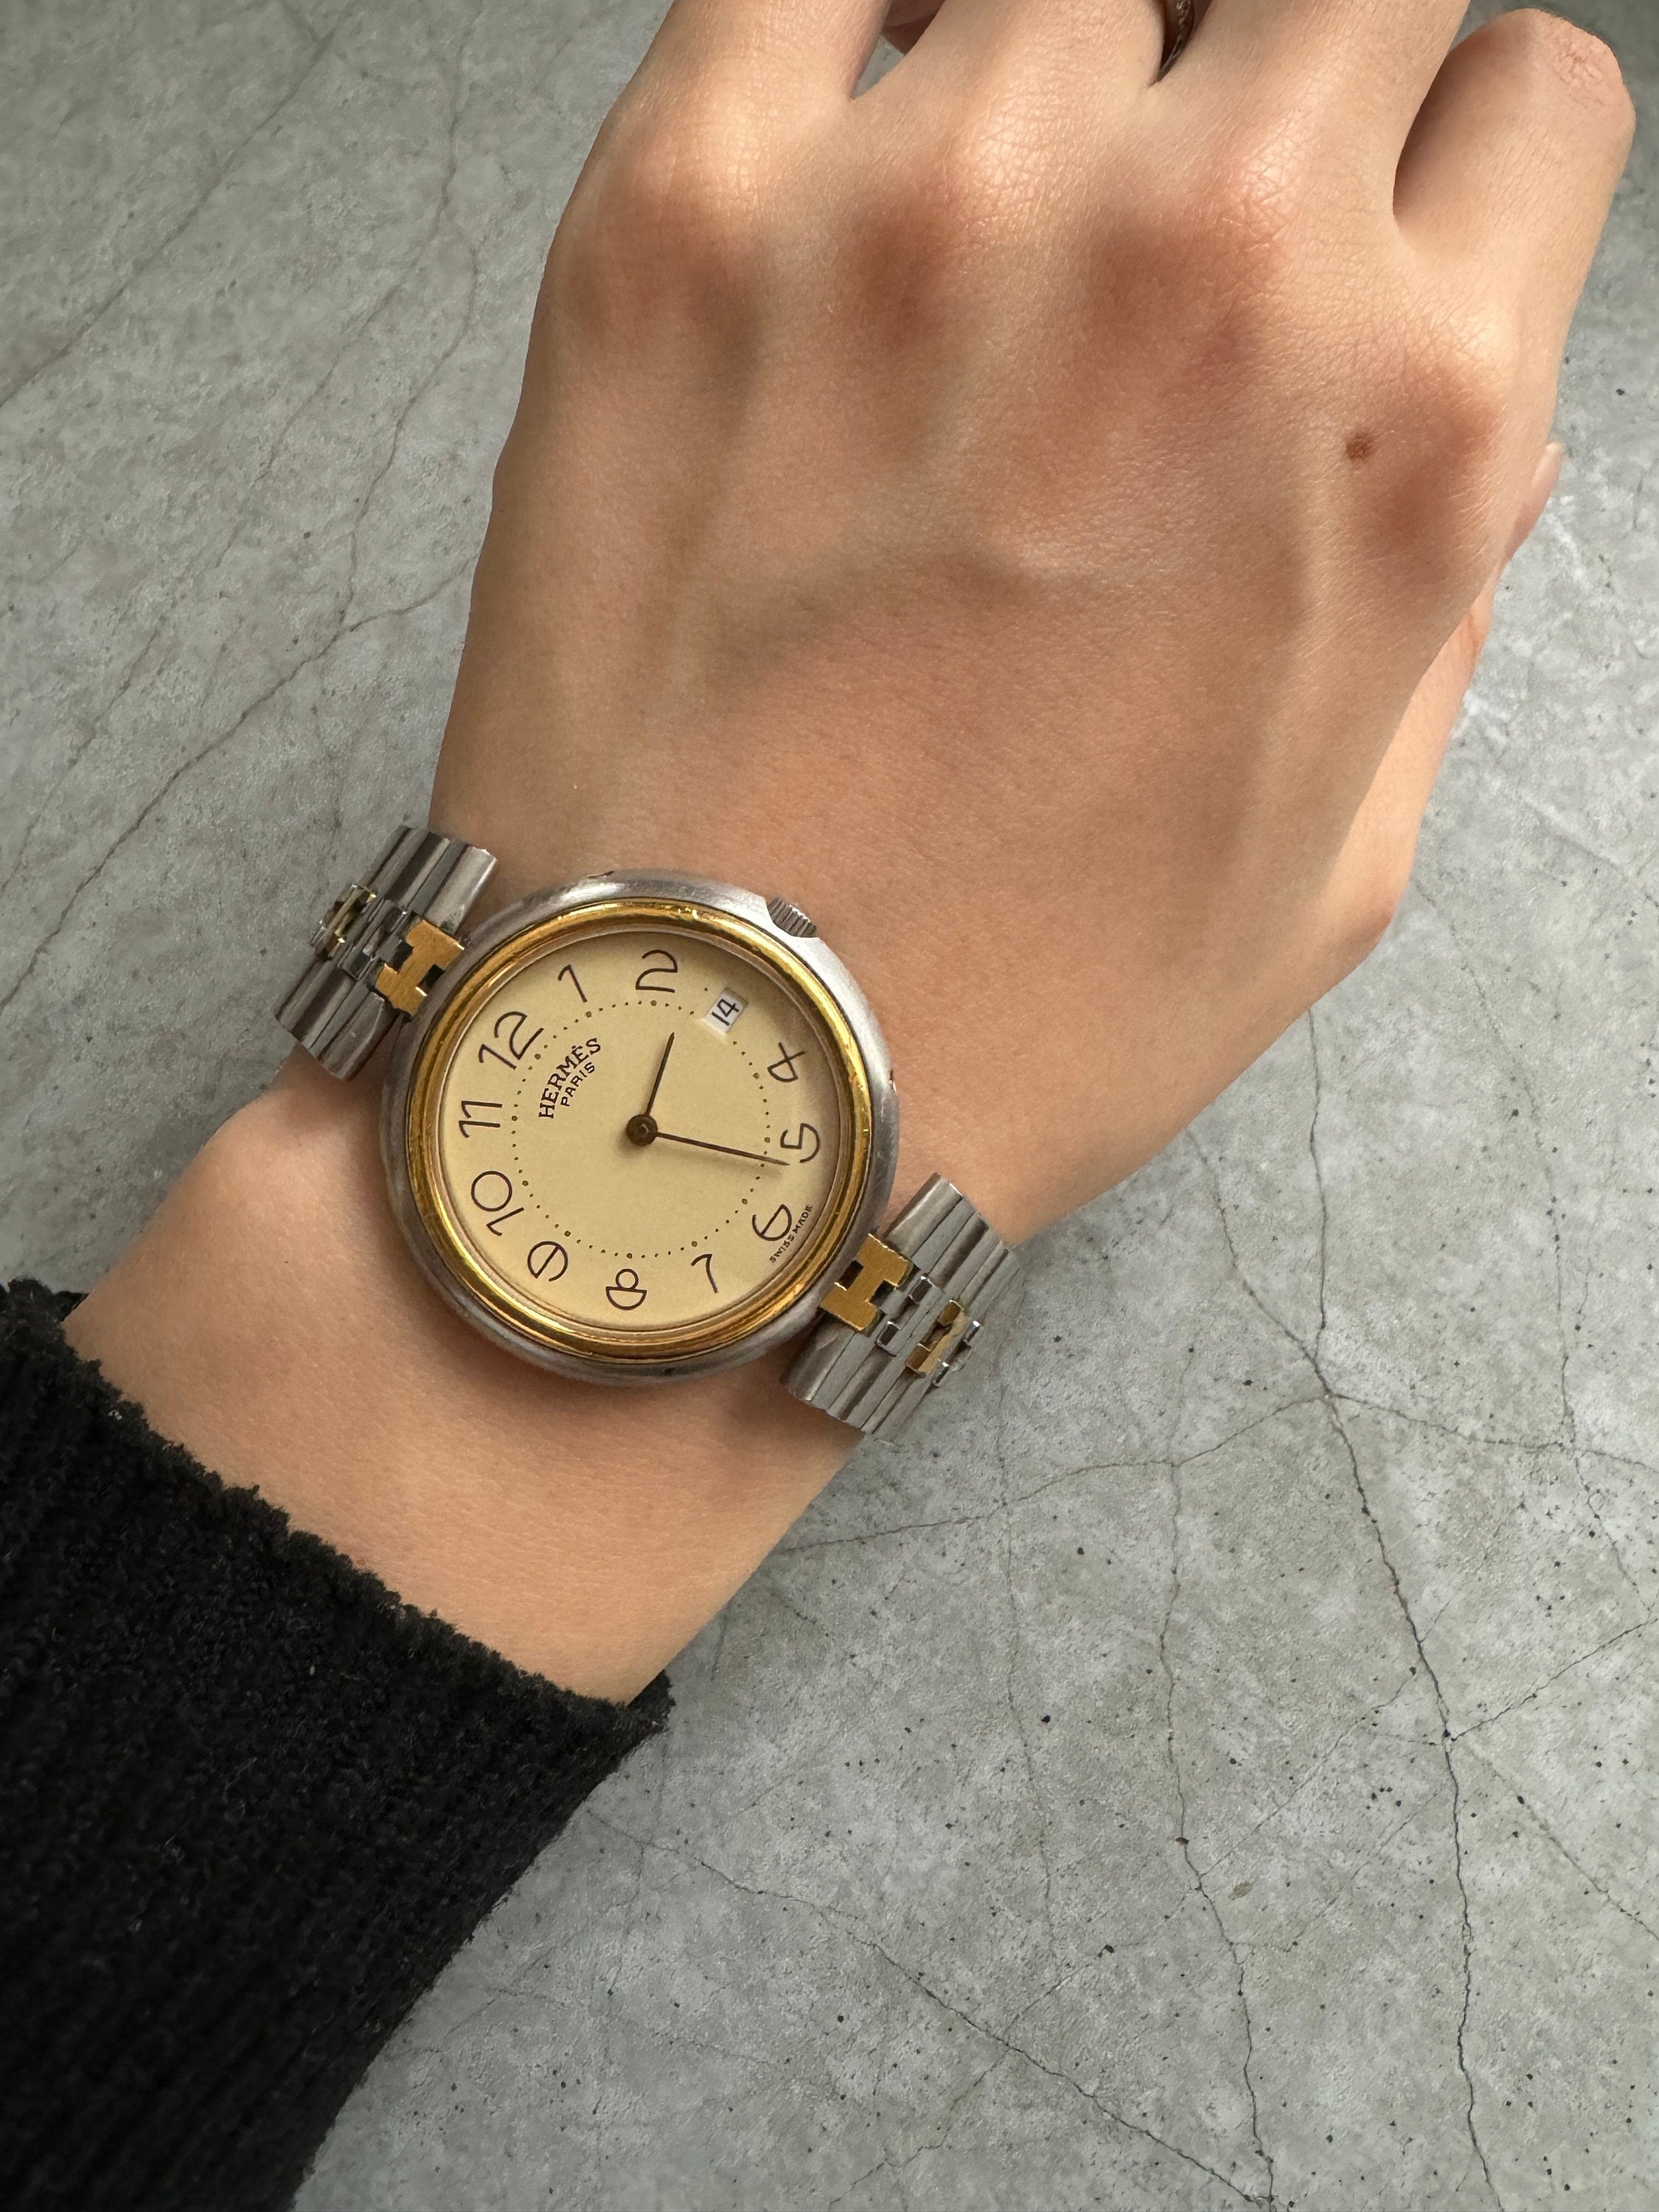 HERMES Profile Combi Date Wristwatch Watche Stainless Steel Unisex Silver Gold Quartz Vintage Authentic